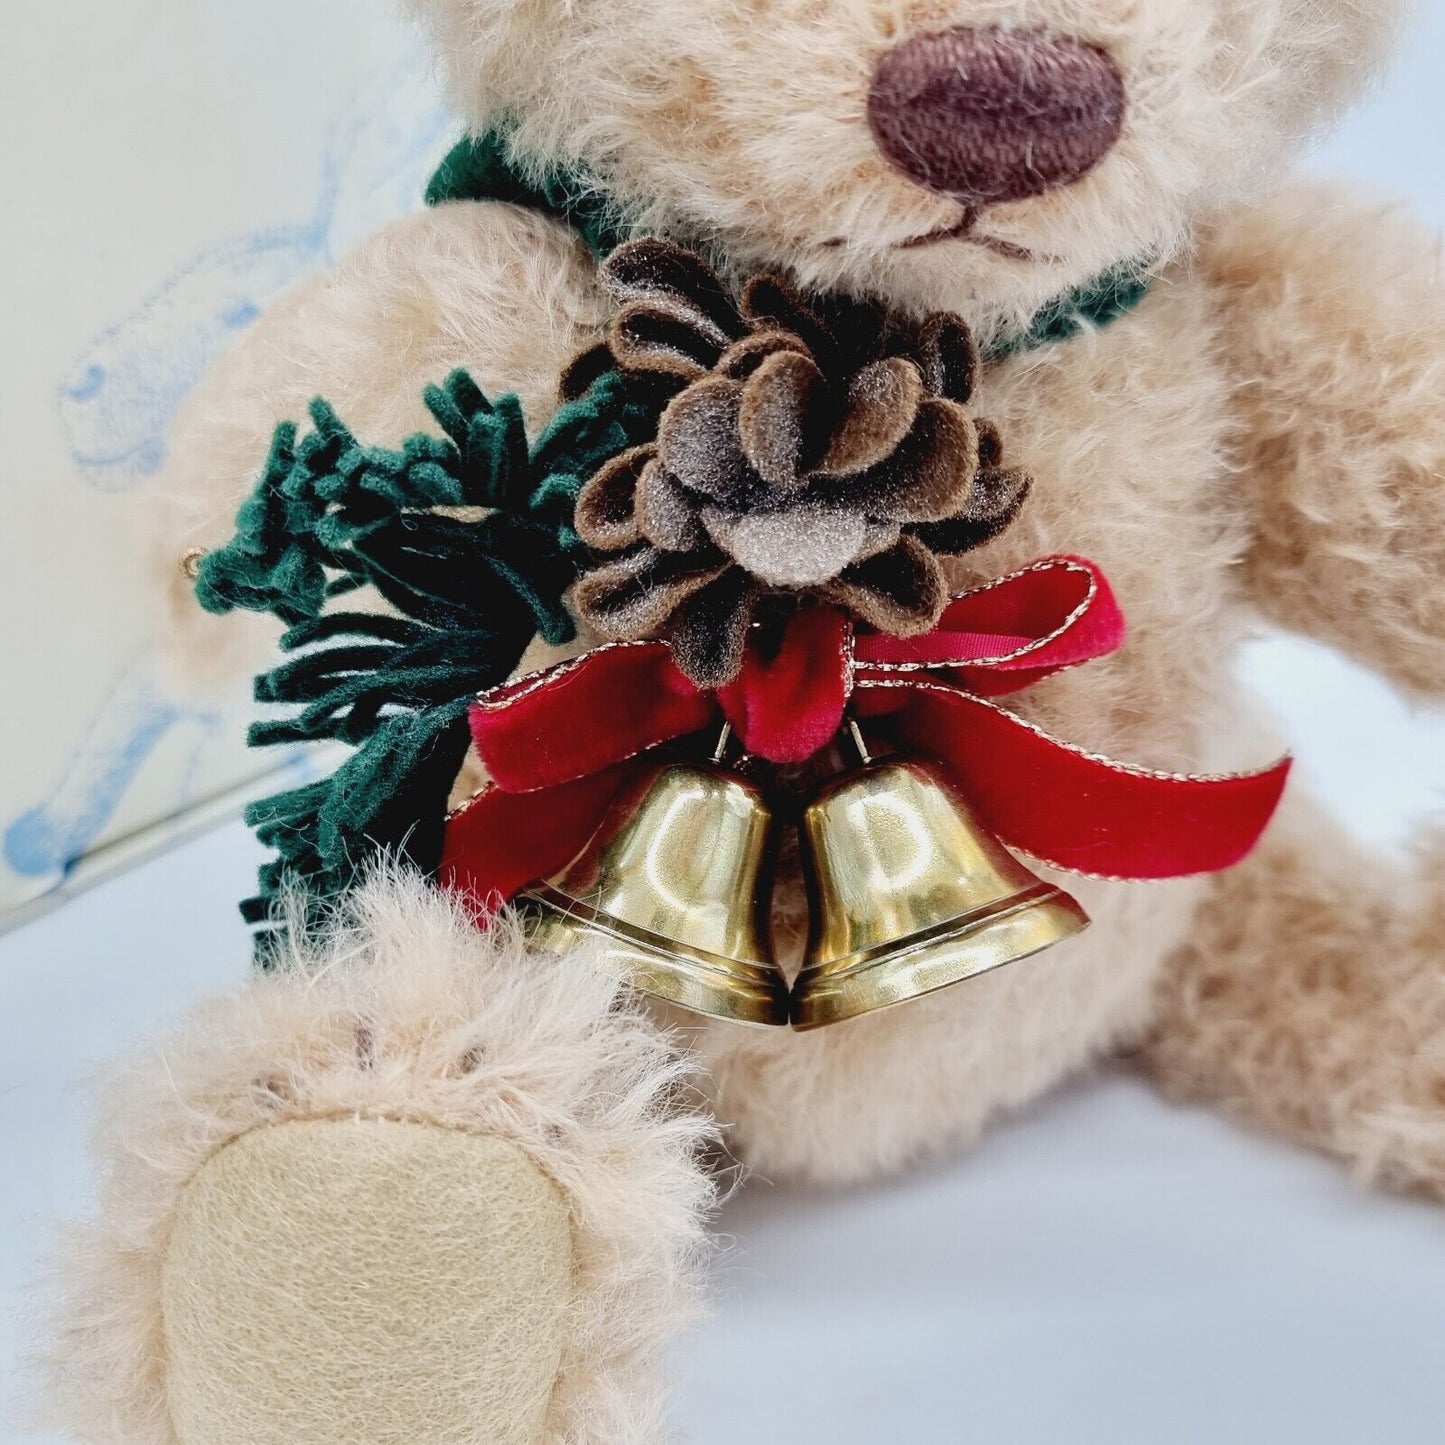 Steiff 034275 Teddybär Kiefer Weihnachten limitiert 1500 aus 2014 30 cm Mohair